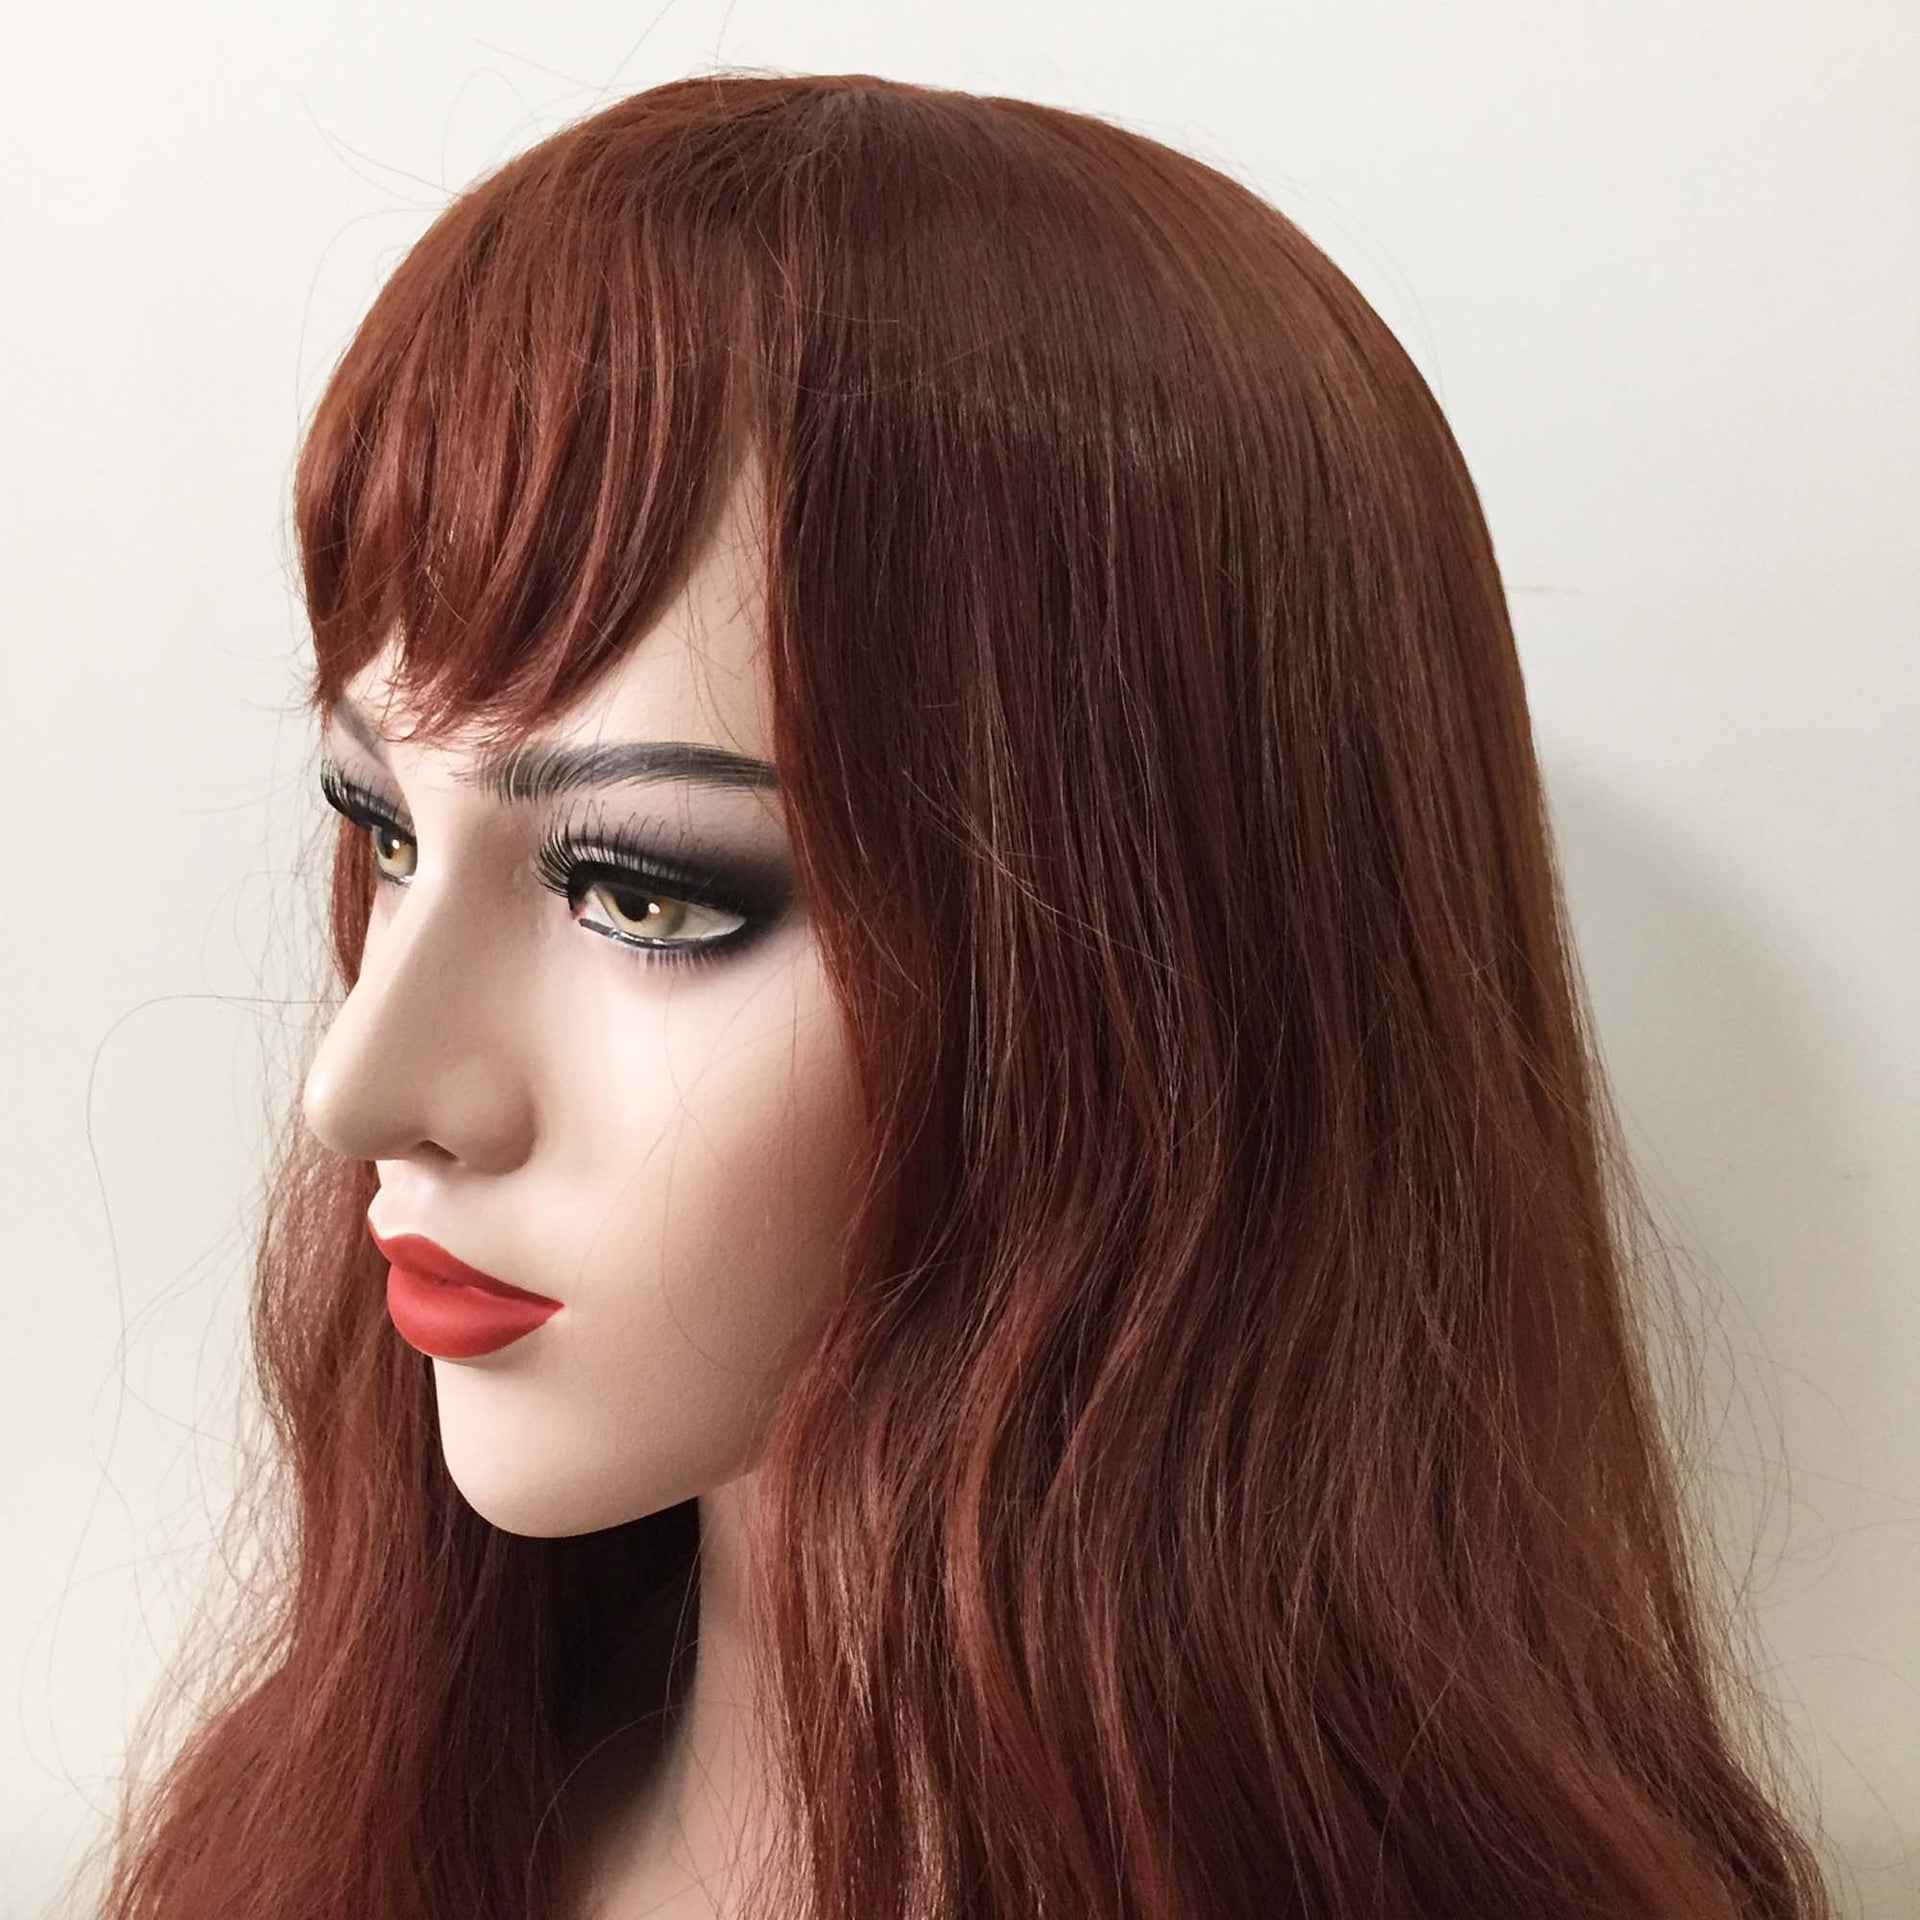 nevermindyrhead Women Auburn Dark Red Long Wavy Fringe Bangs Wig